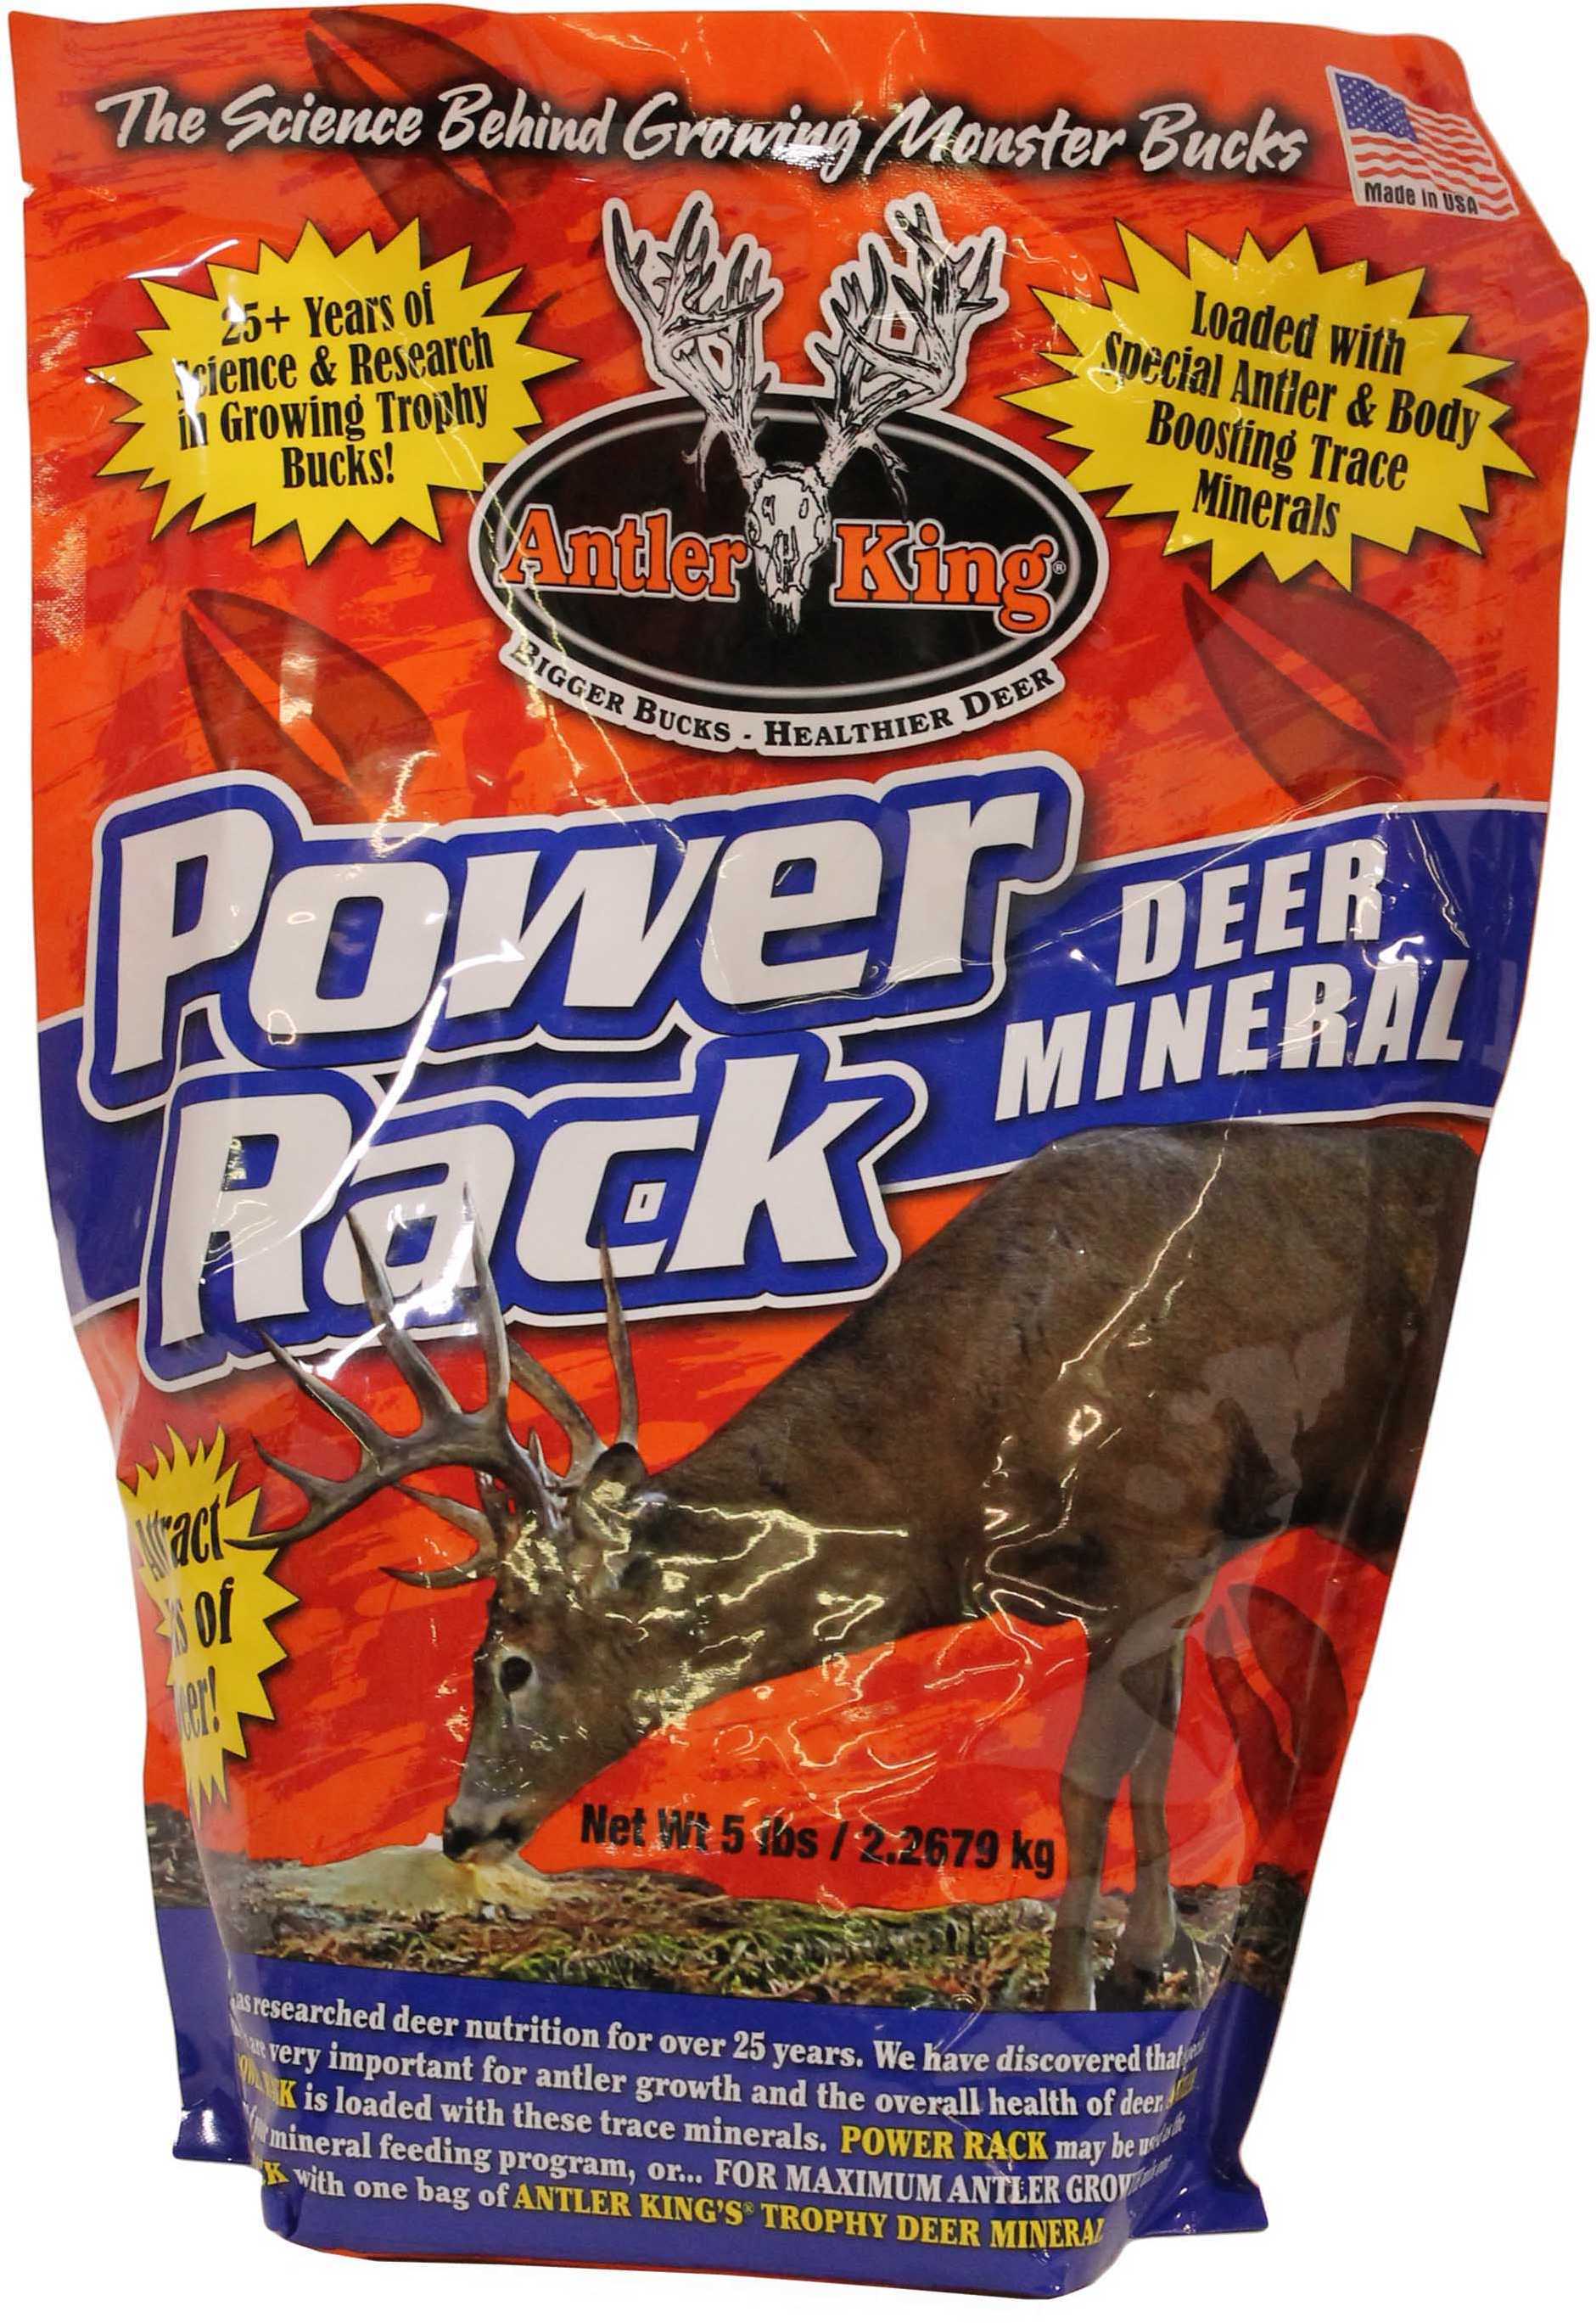 Antler King Attractants, Blocks, Minerals, and Supplements Power Rack Md: pr5